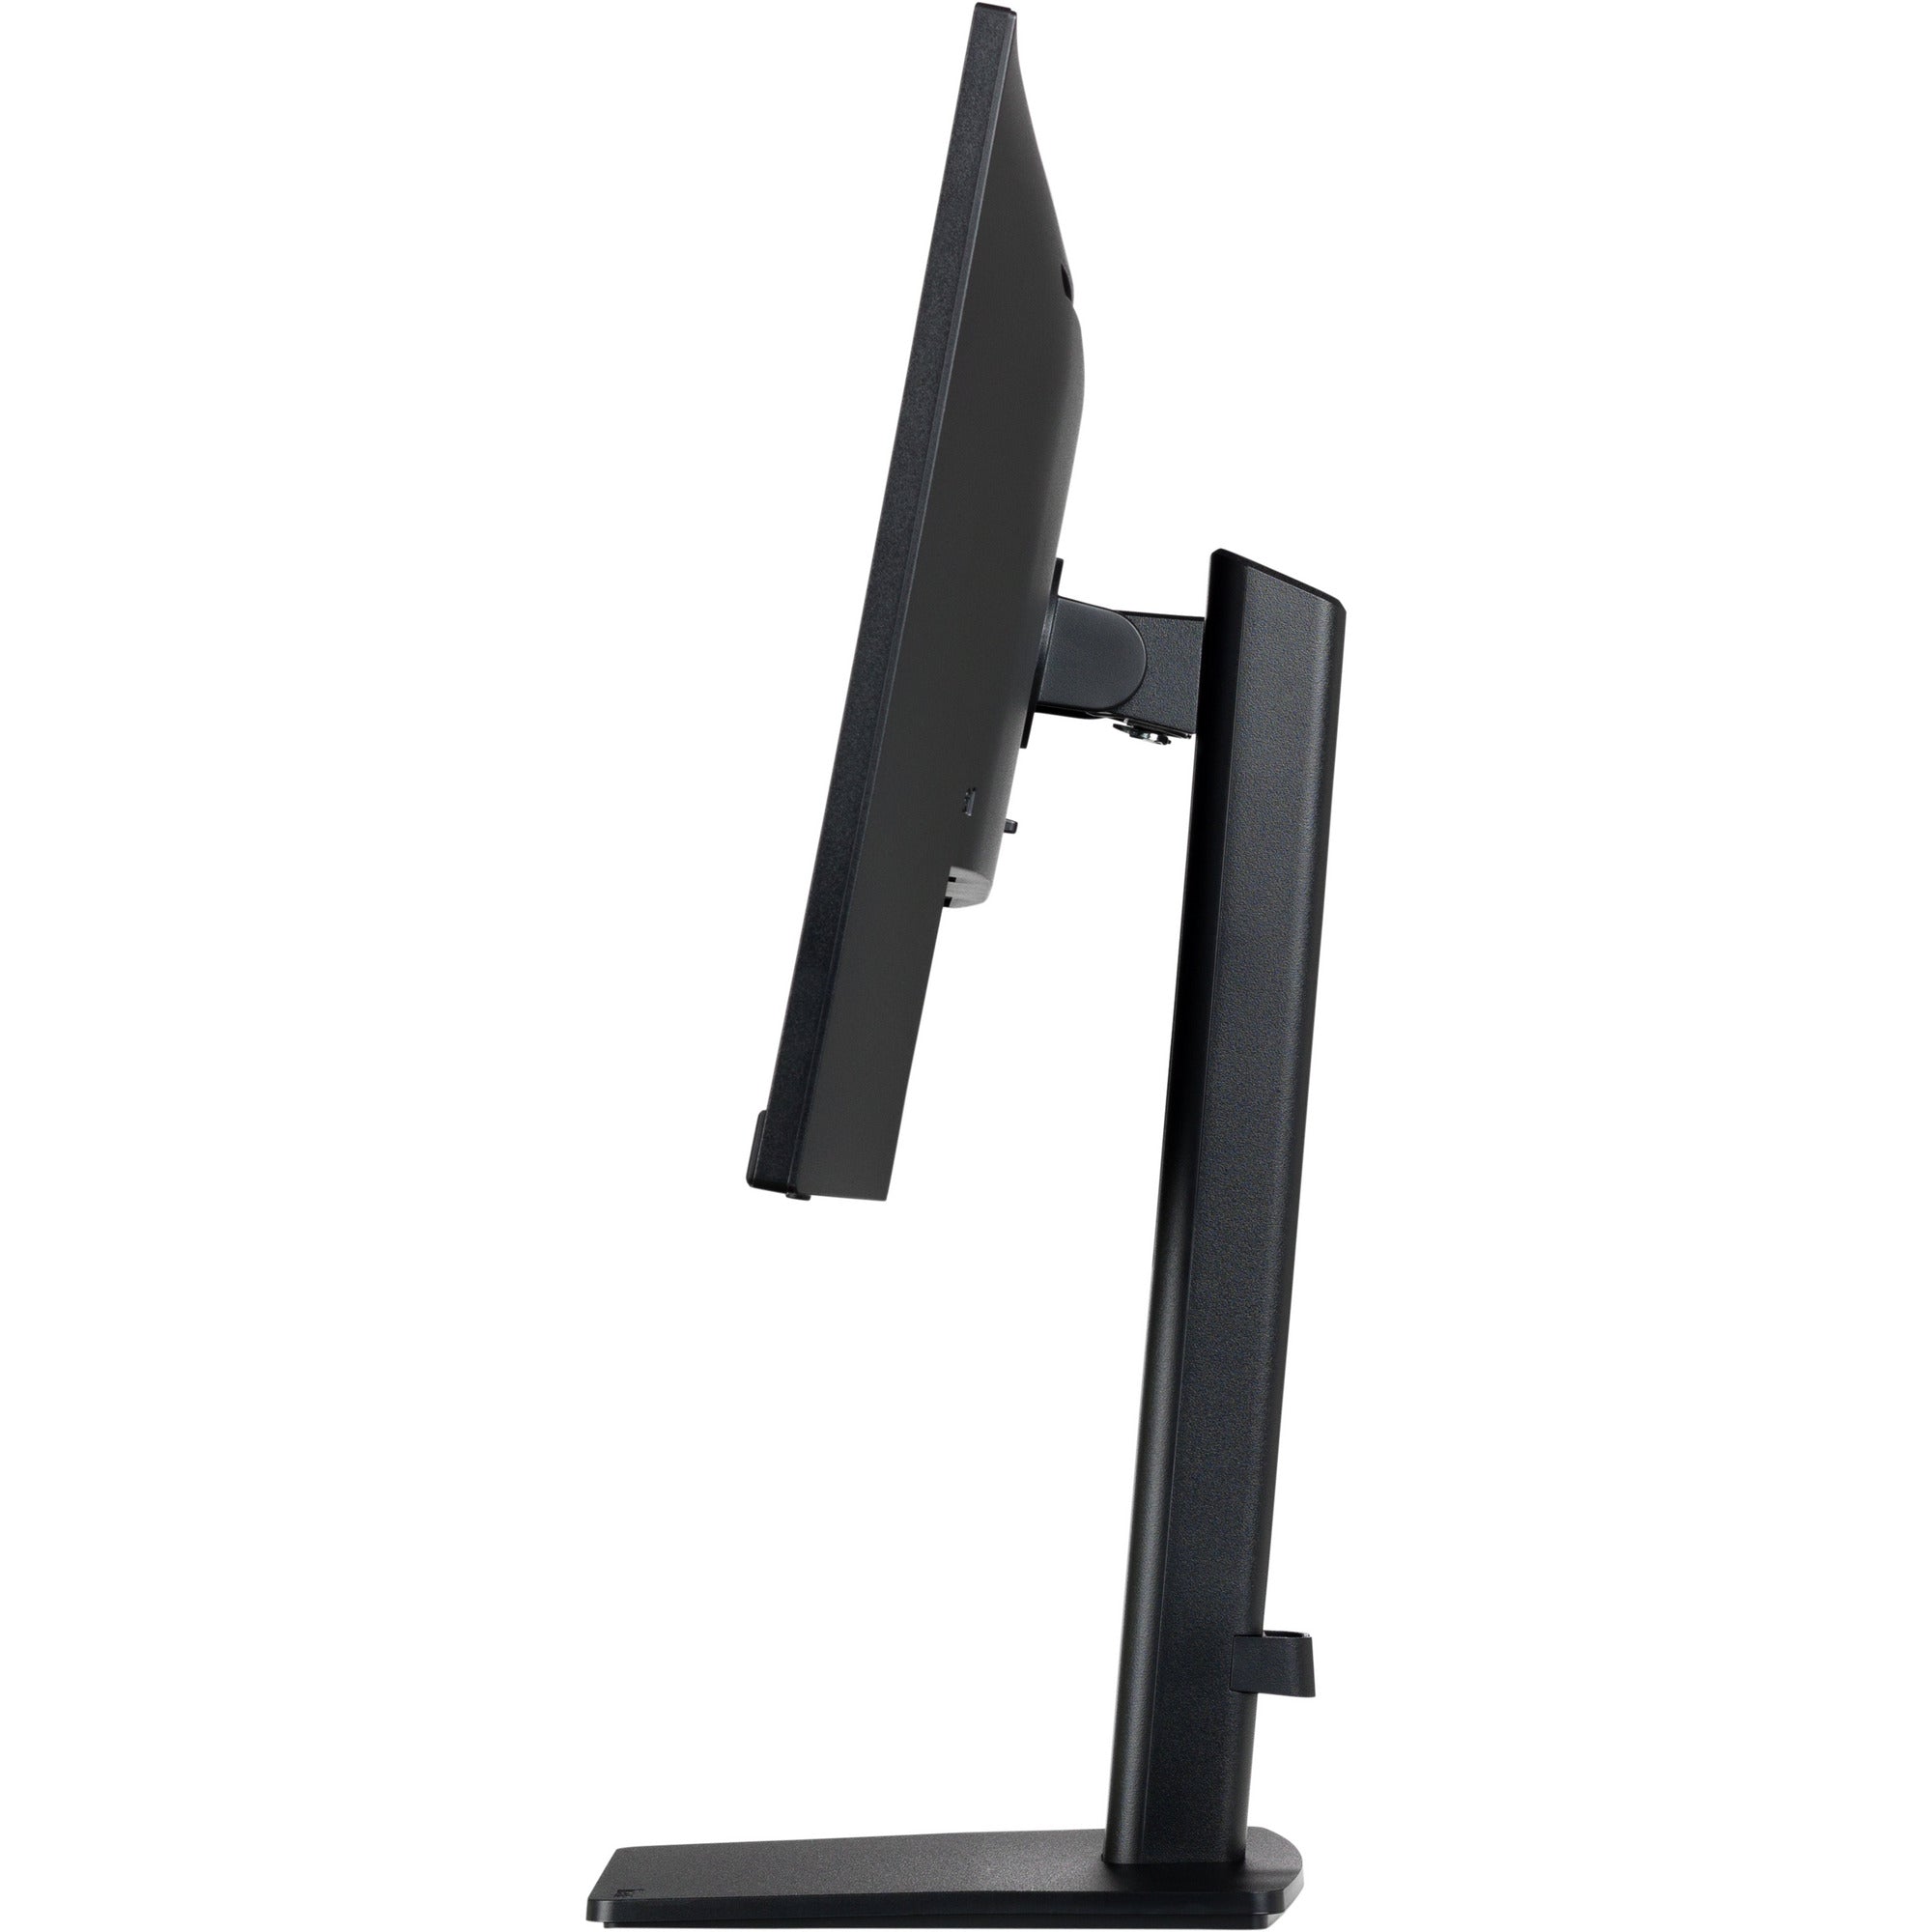 Iiyama ProLite XUB2494HSU-B2 24” Full HD monitor with VA panel and height adjustable stand